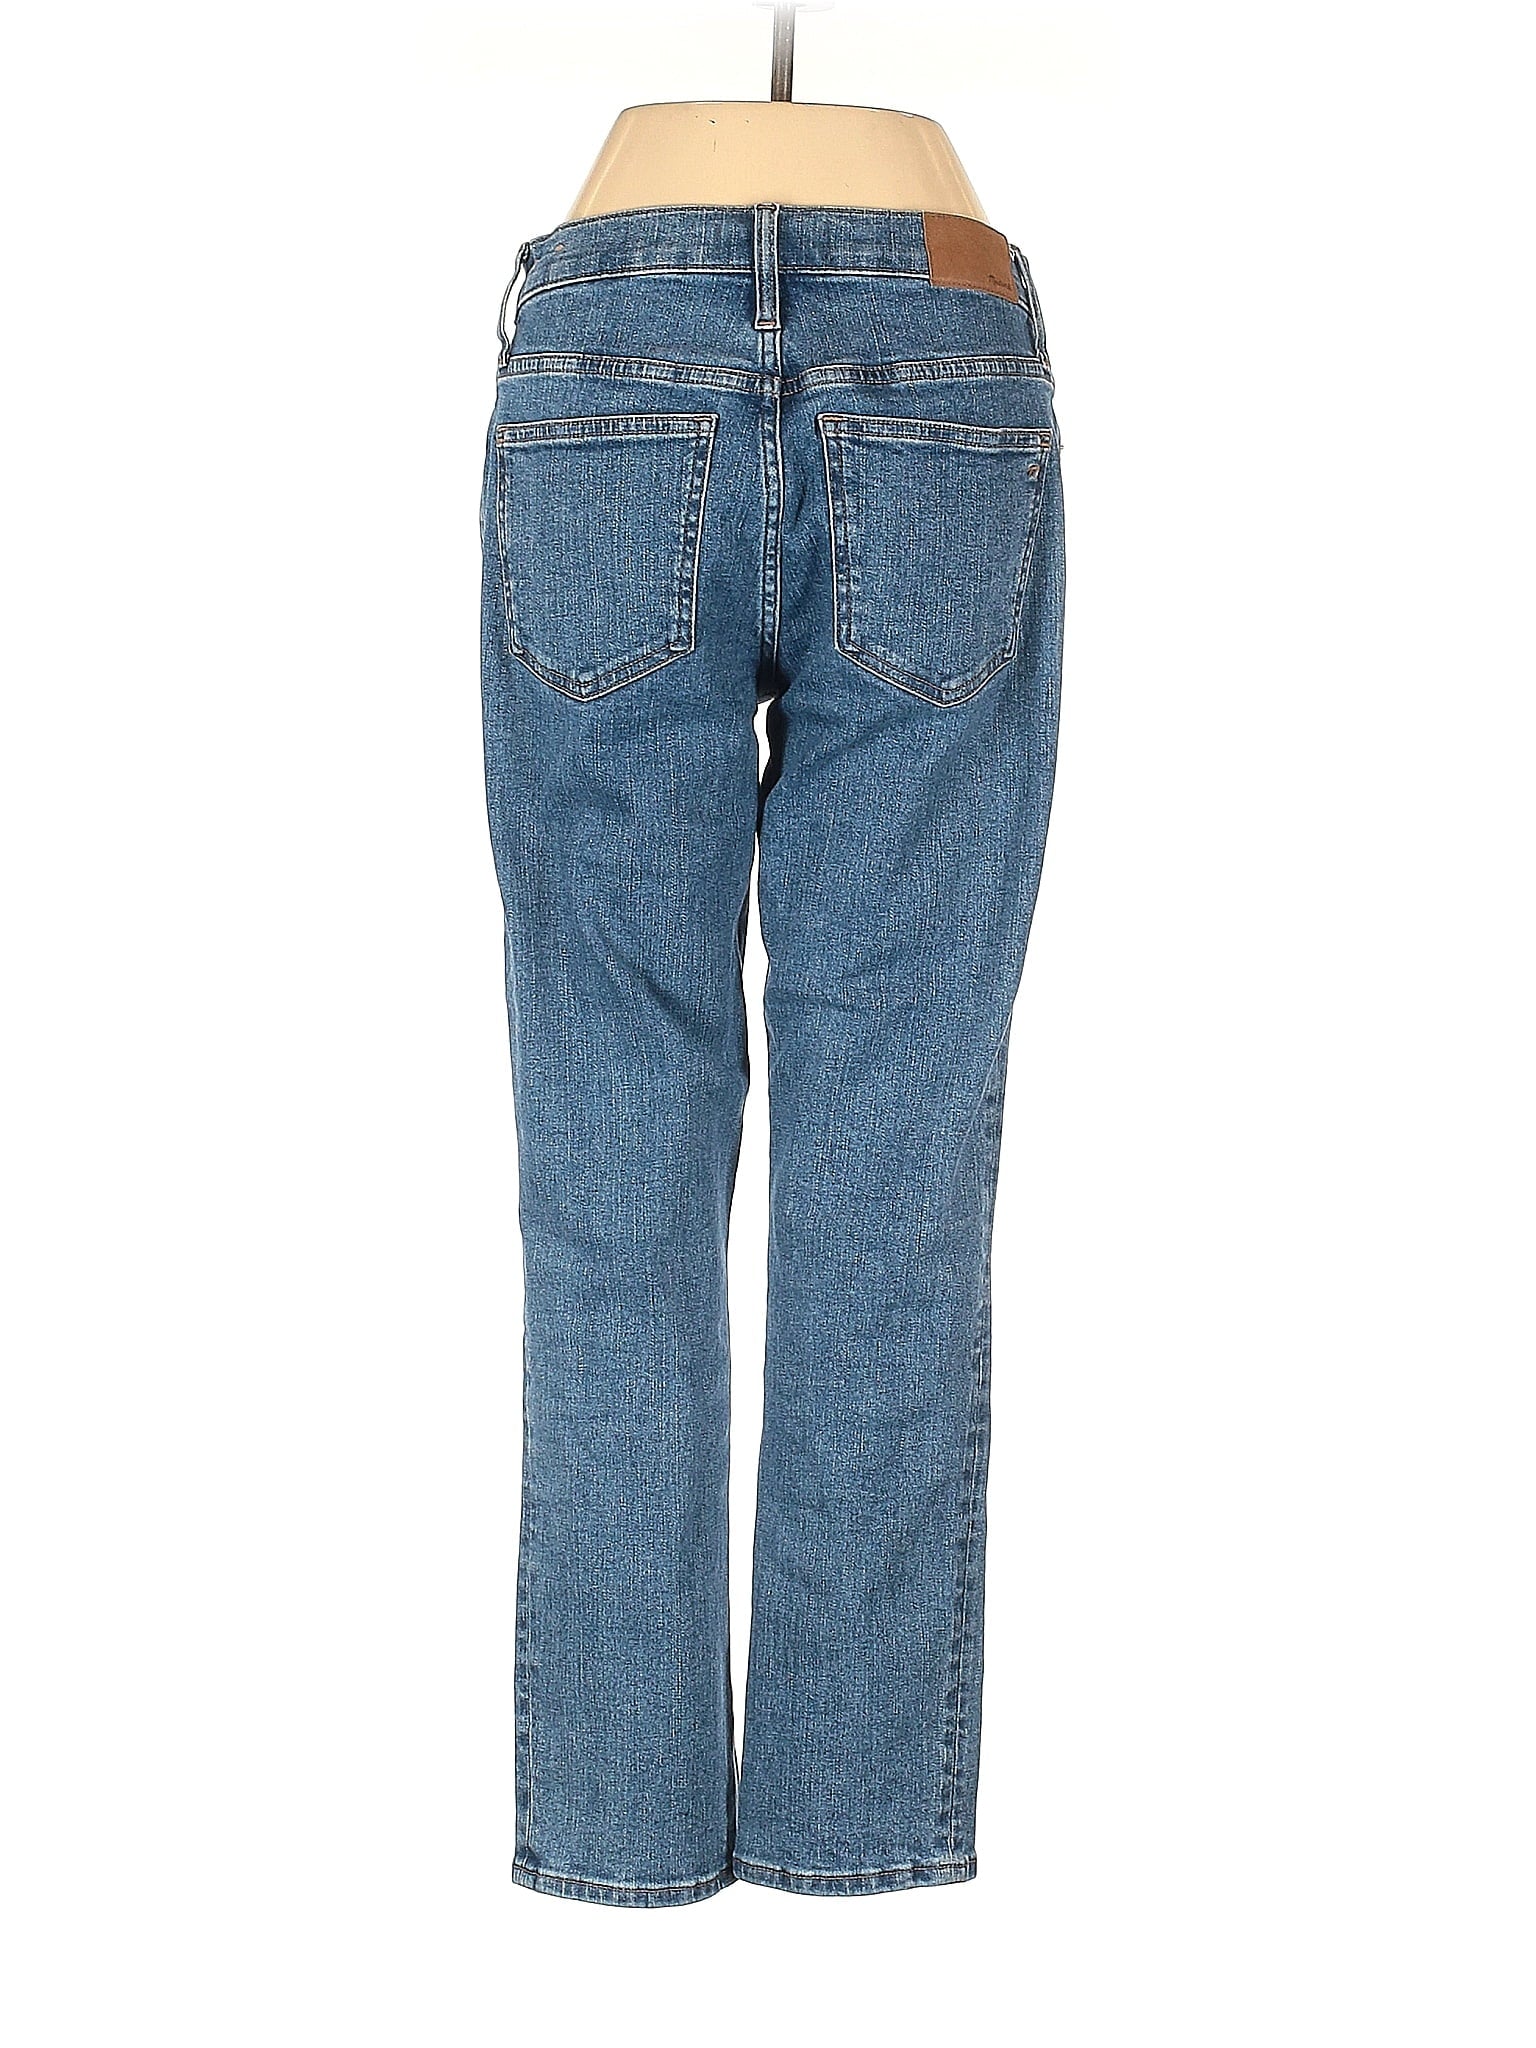 Low-Rise Straight-leg Jeans in Medium Wash waist size - 26